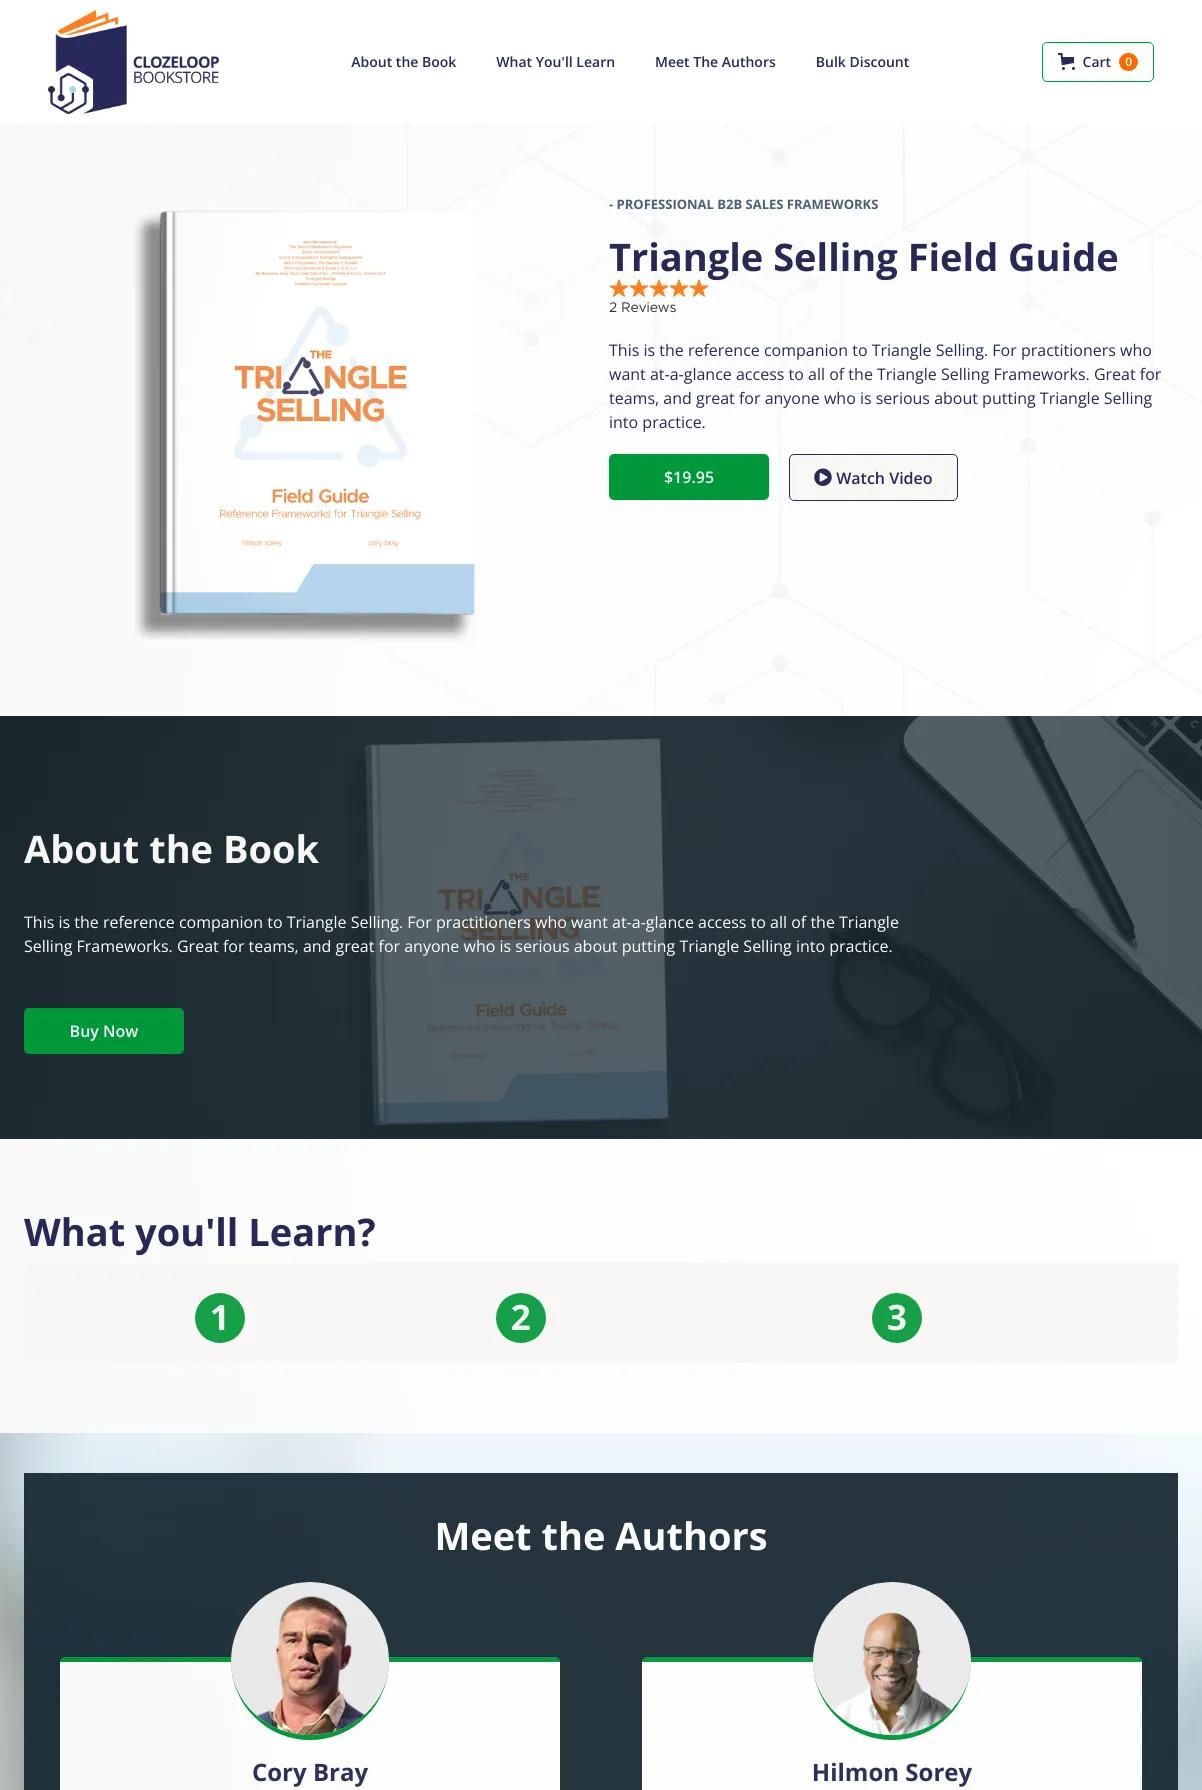 Screenshot 3 of ClozeLoop Bookstore (Example Webflow Ecommerce Website)